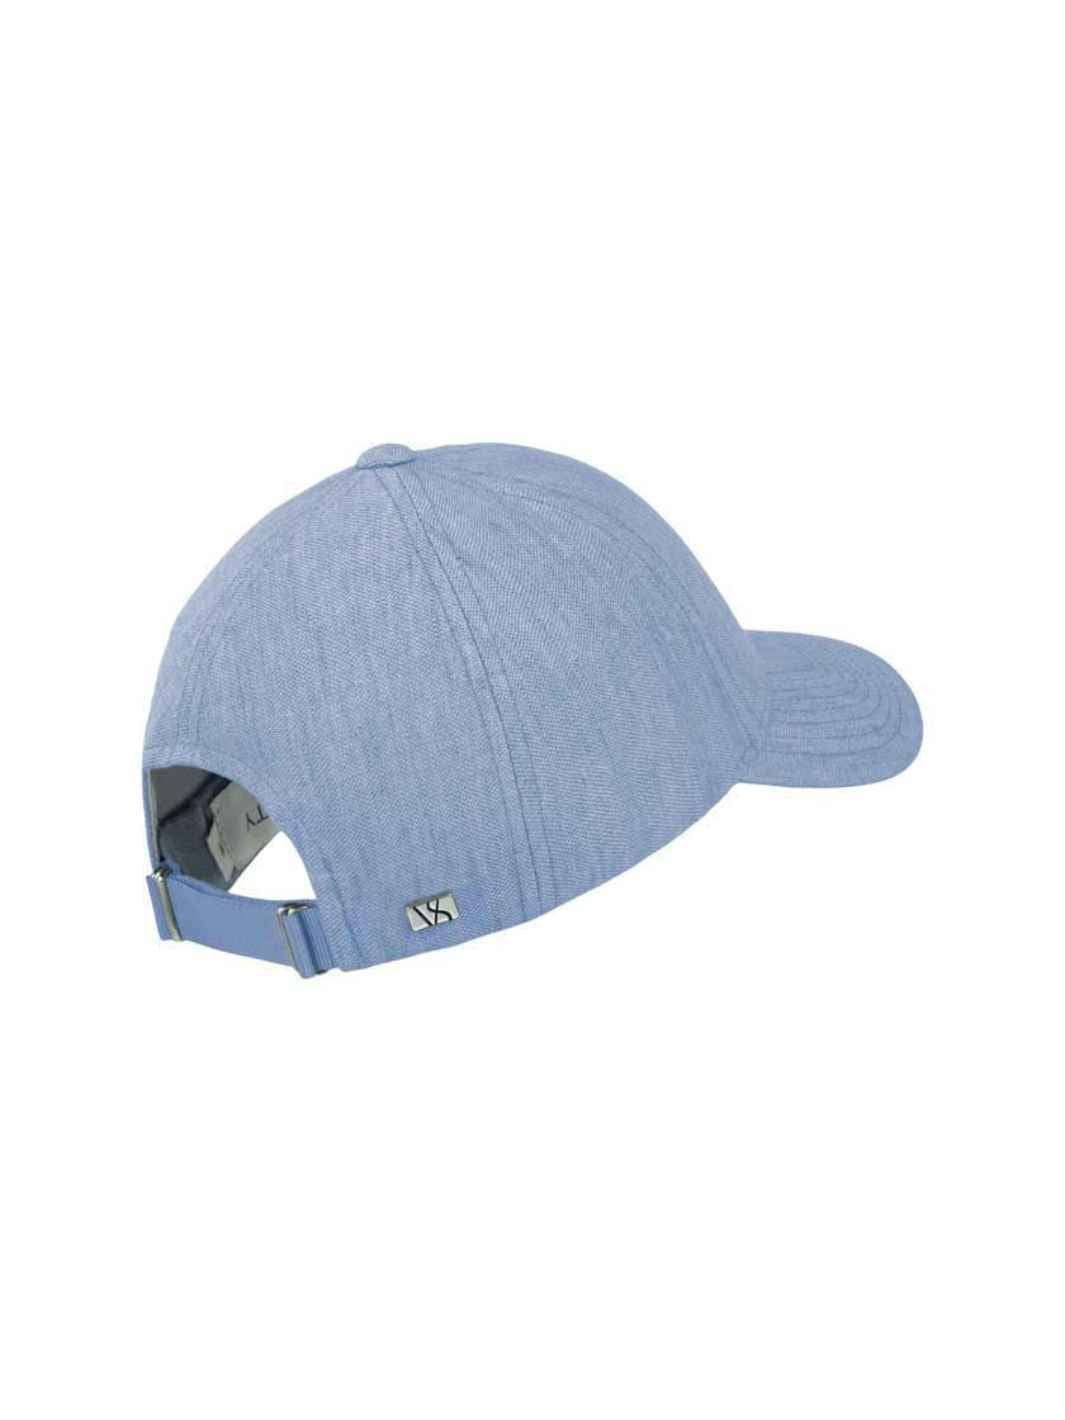 Varsity Headwear Accessories Cap | Azure Blue Linen